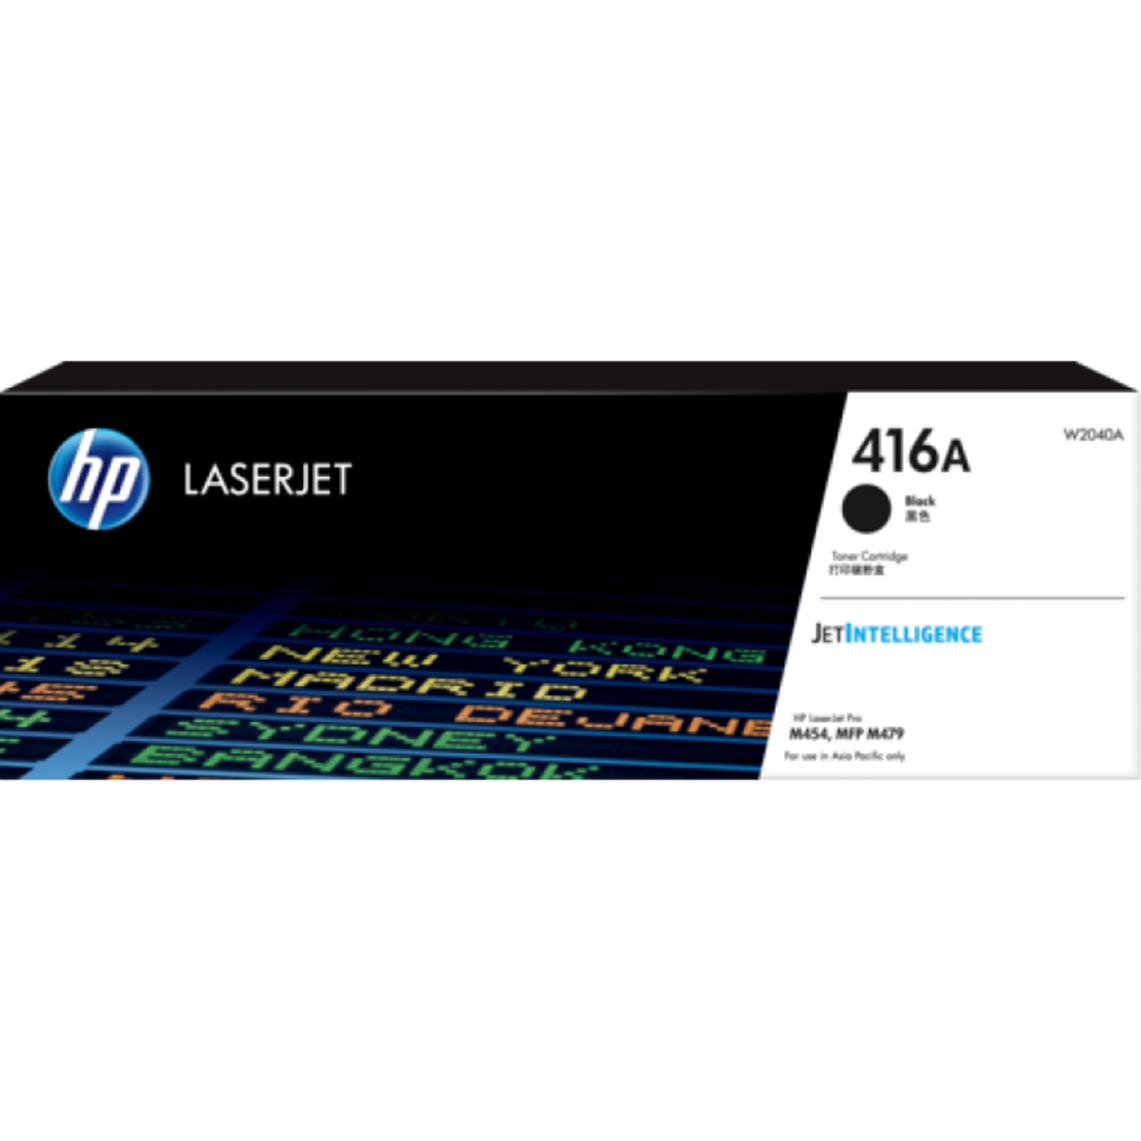 HP Color LaserJet Pro M479fdw代用碳粉規格